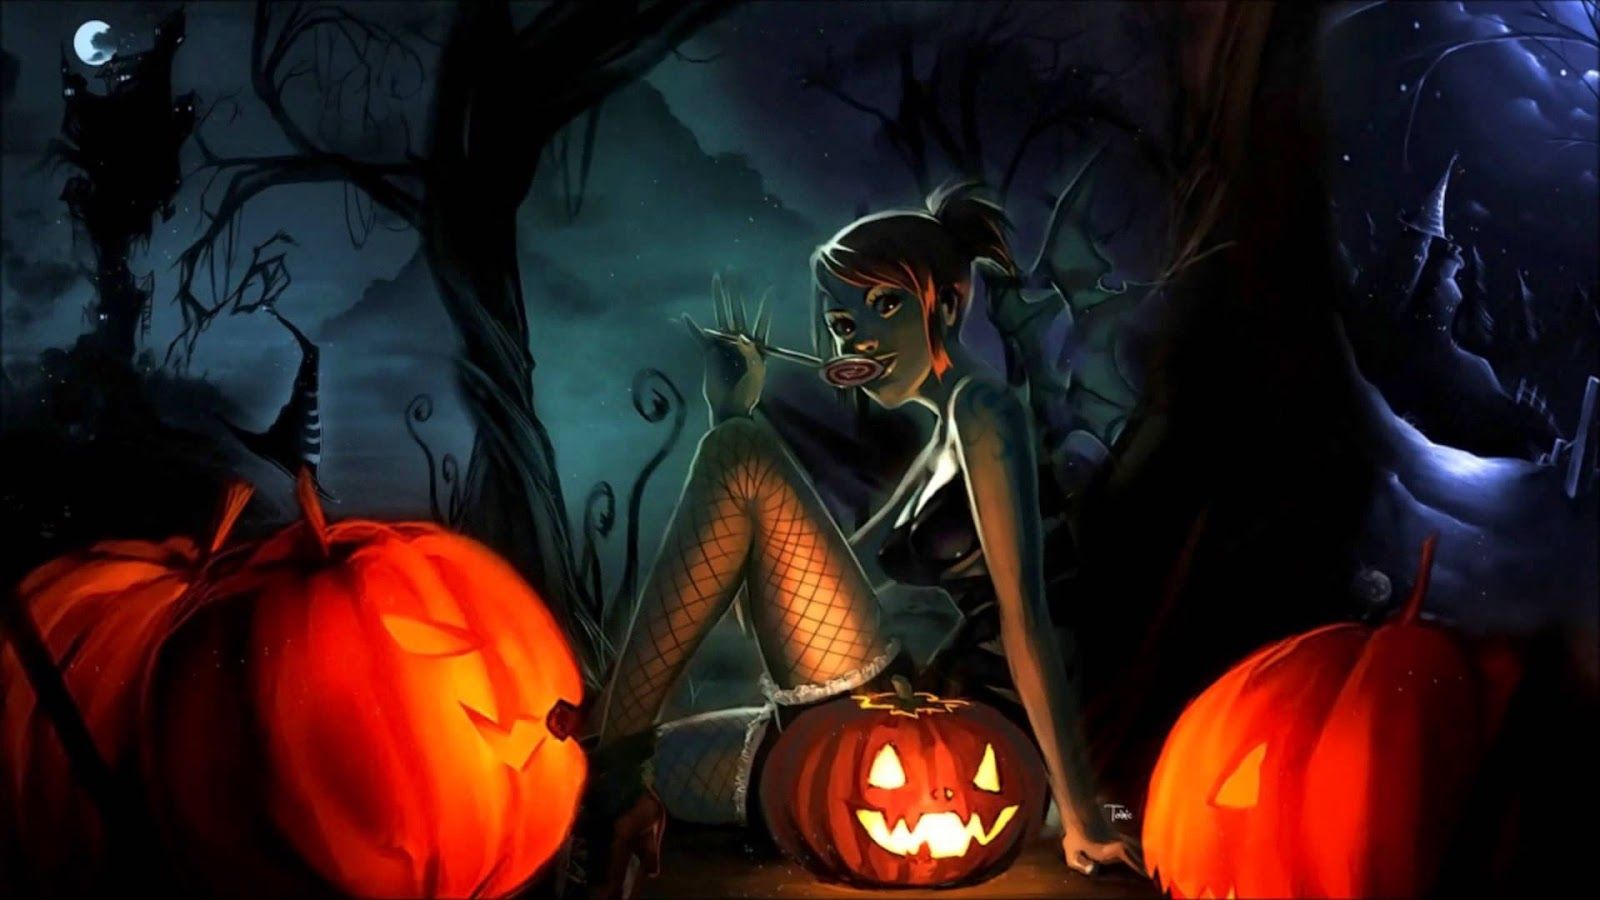 Halloween Wallpaper: HD Pumpkin Wallpaper For Halloween, HD Jack o lantern background